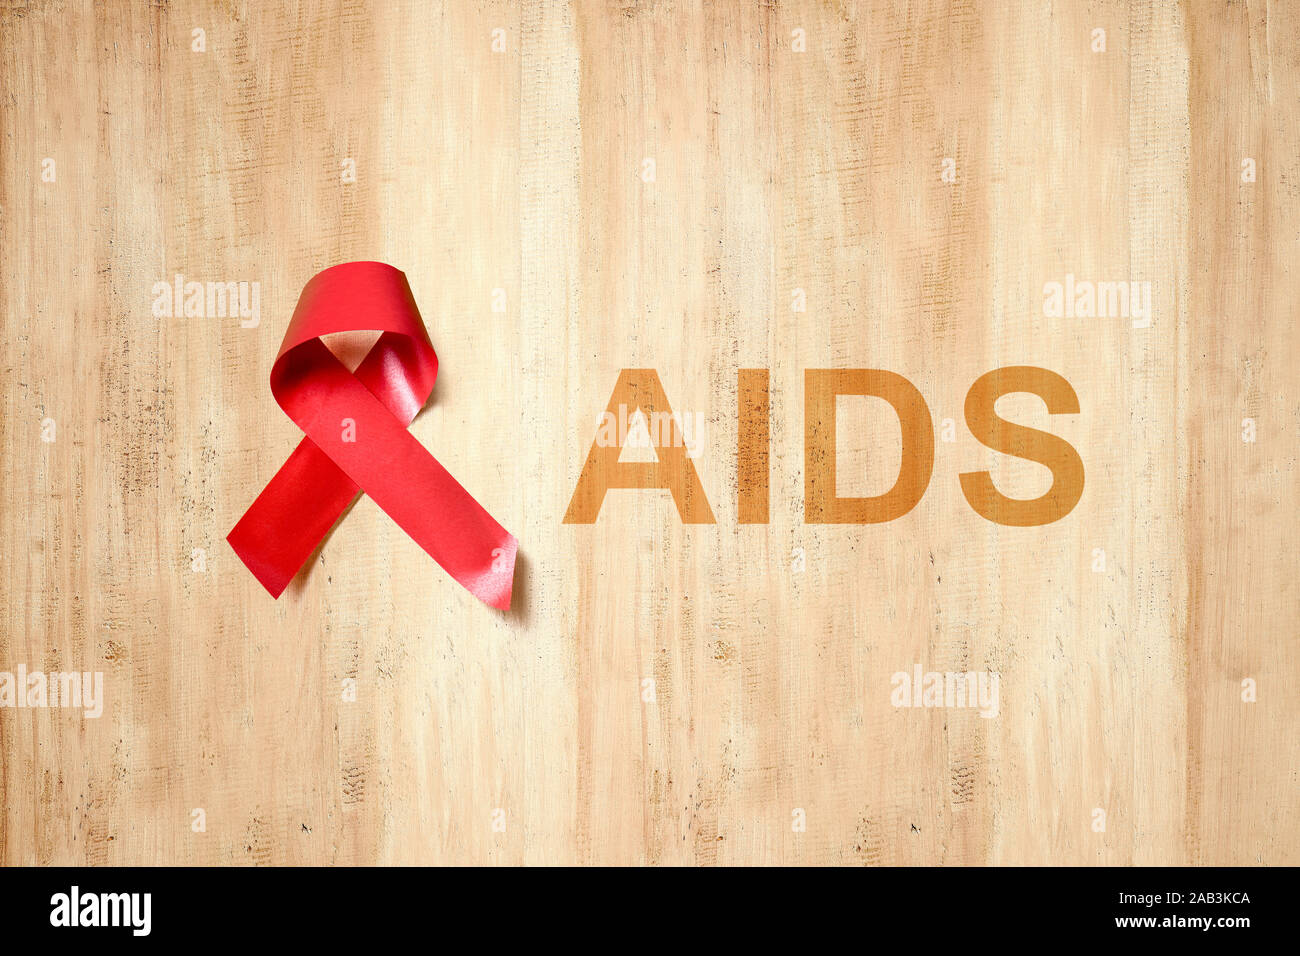 Ютуб спид. СПИД. HIV AIDS. Красивые картинки с буквами HIV.